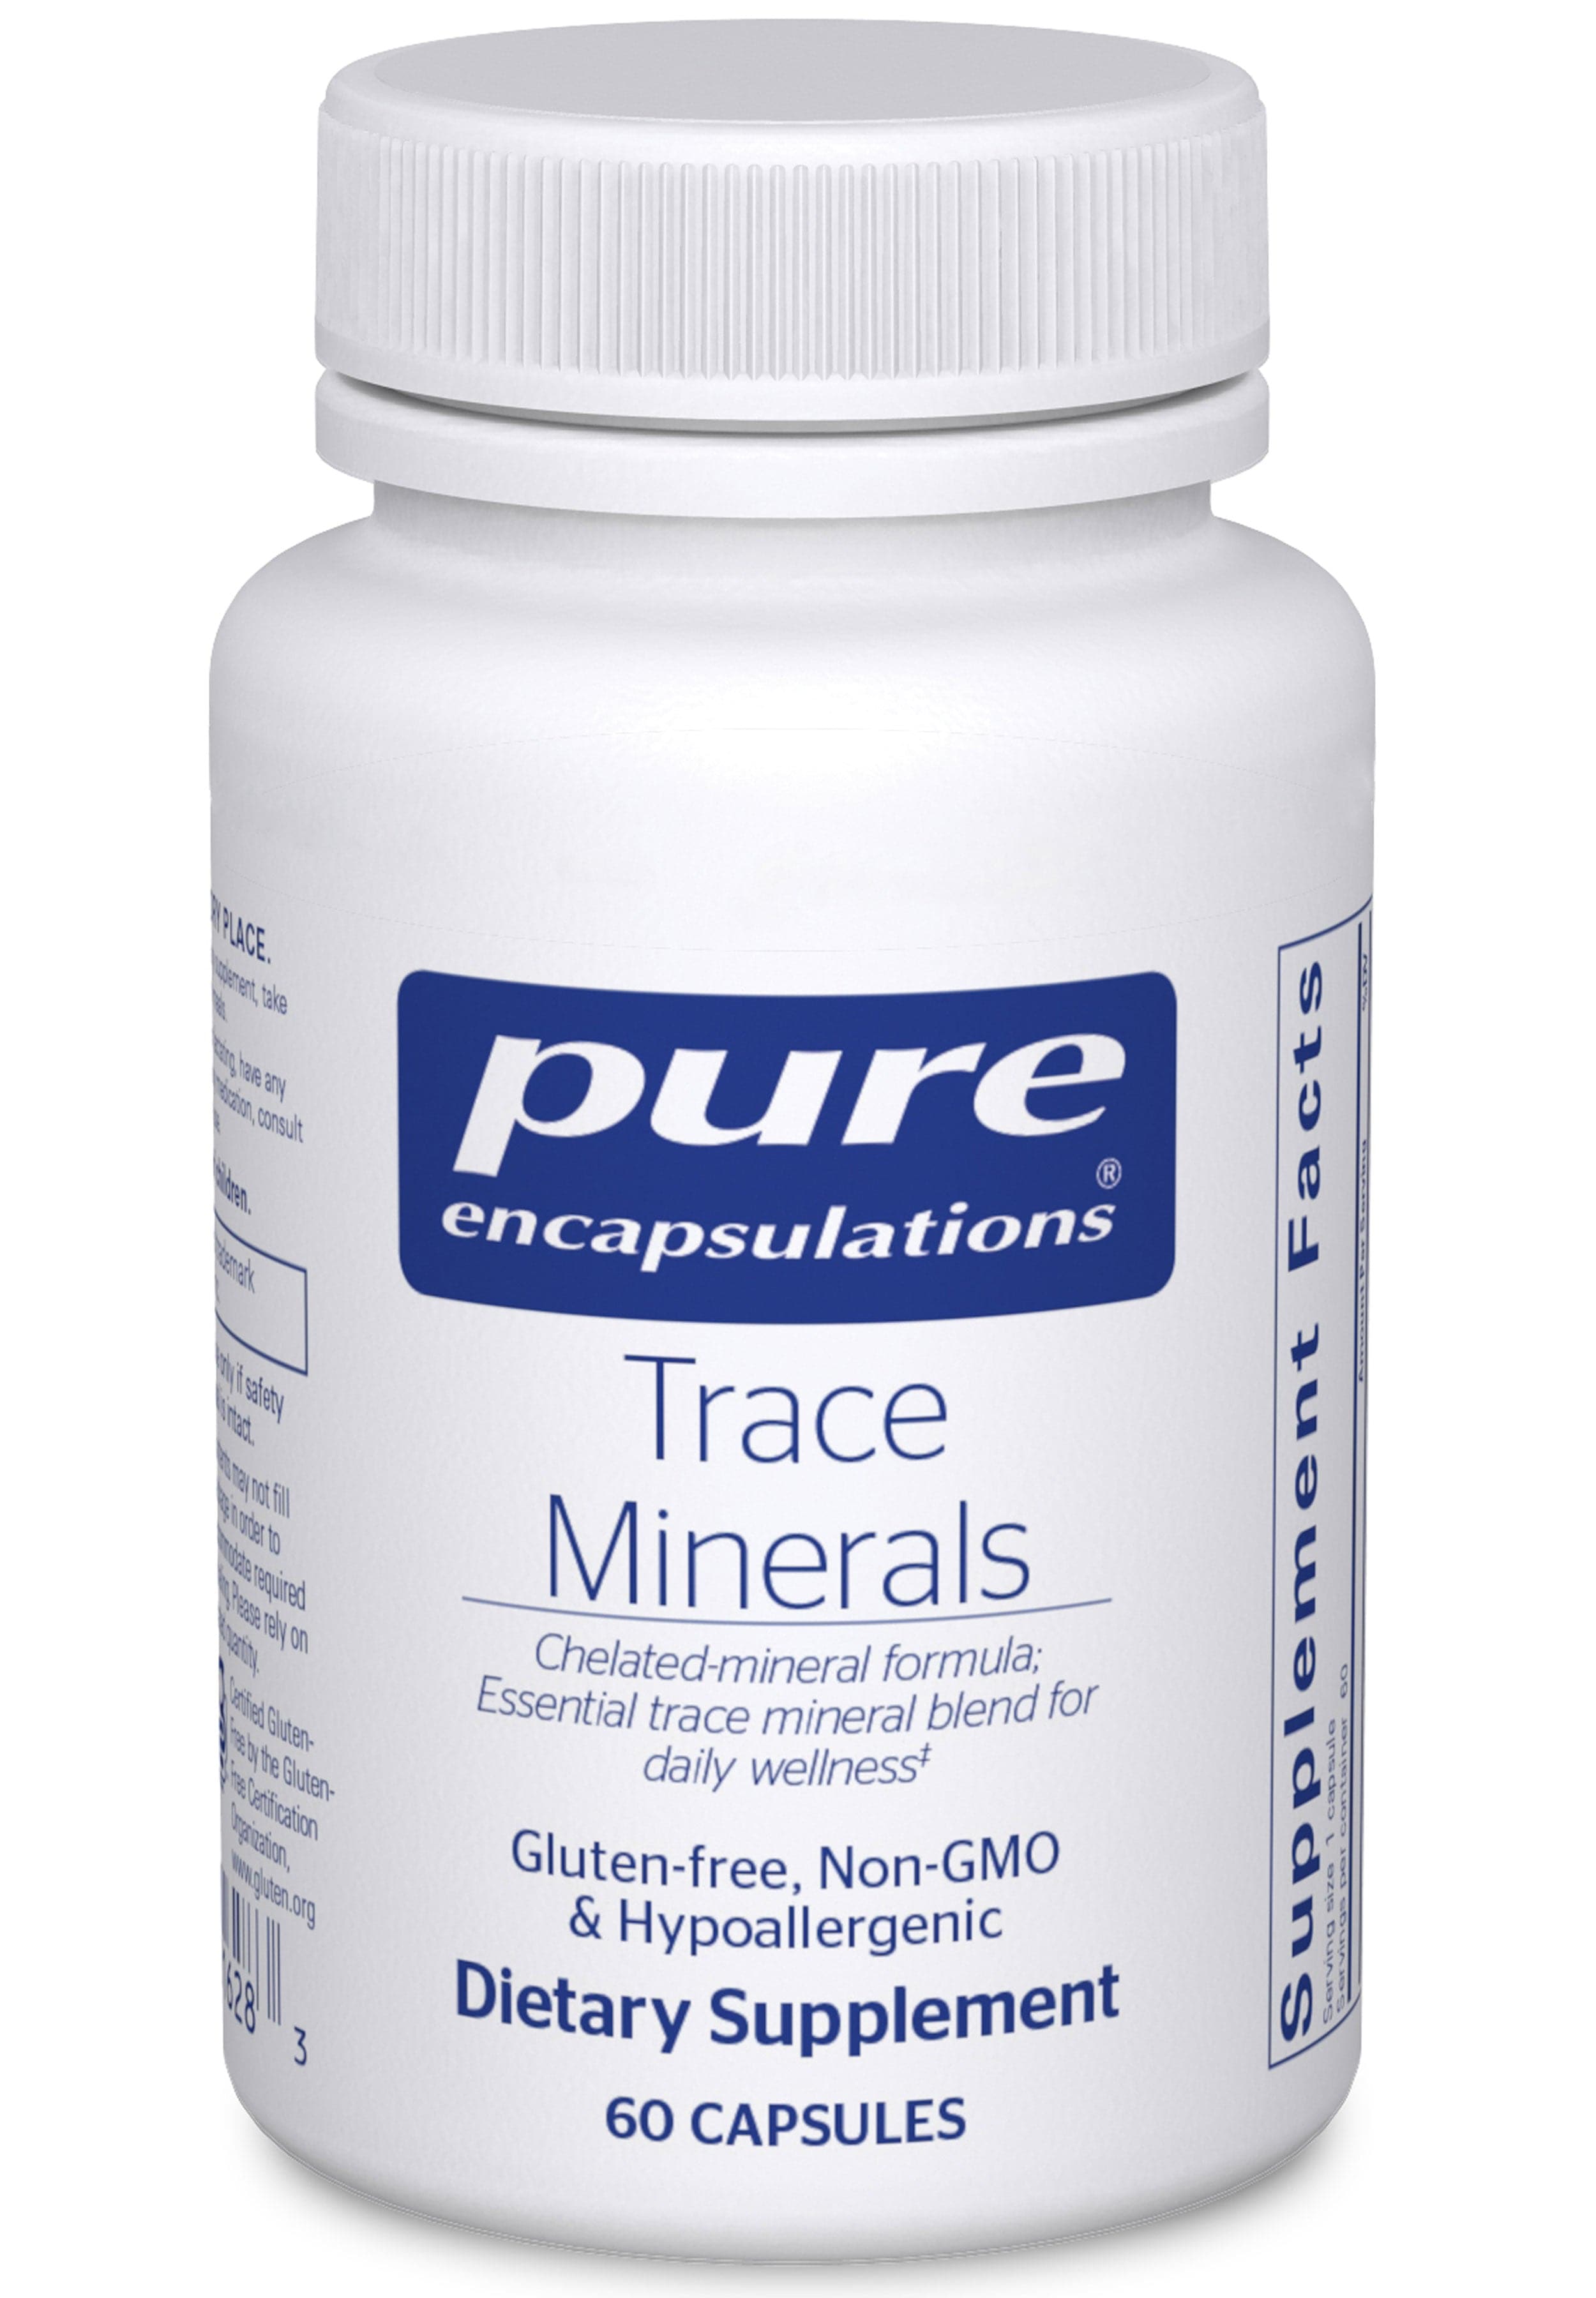 Pure Encapsulations Trace Minerals